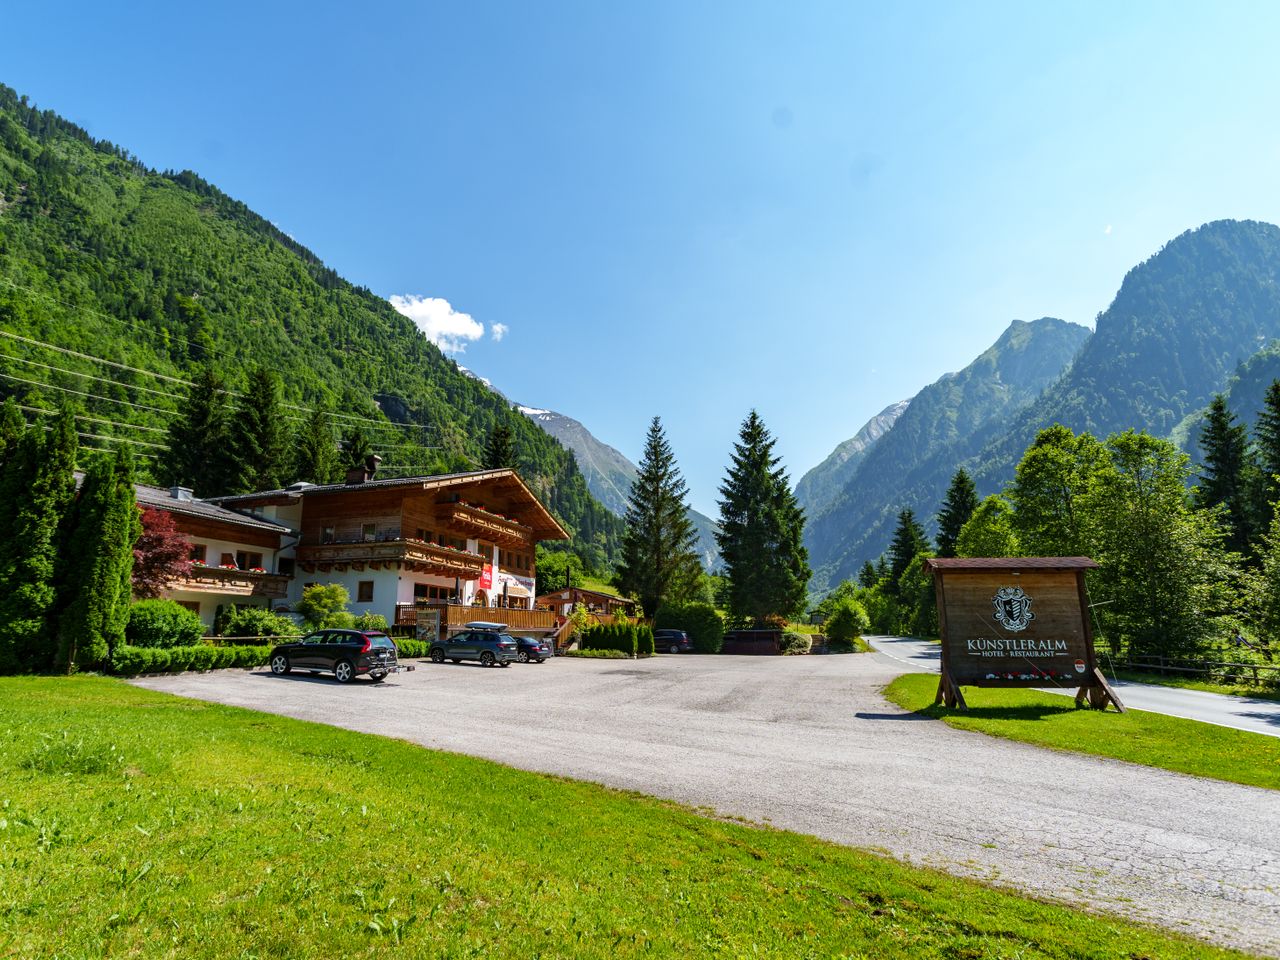 Bergluft, Erholung, Natur - 3 Tage im Pinzgau